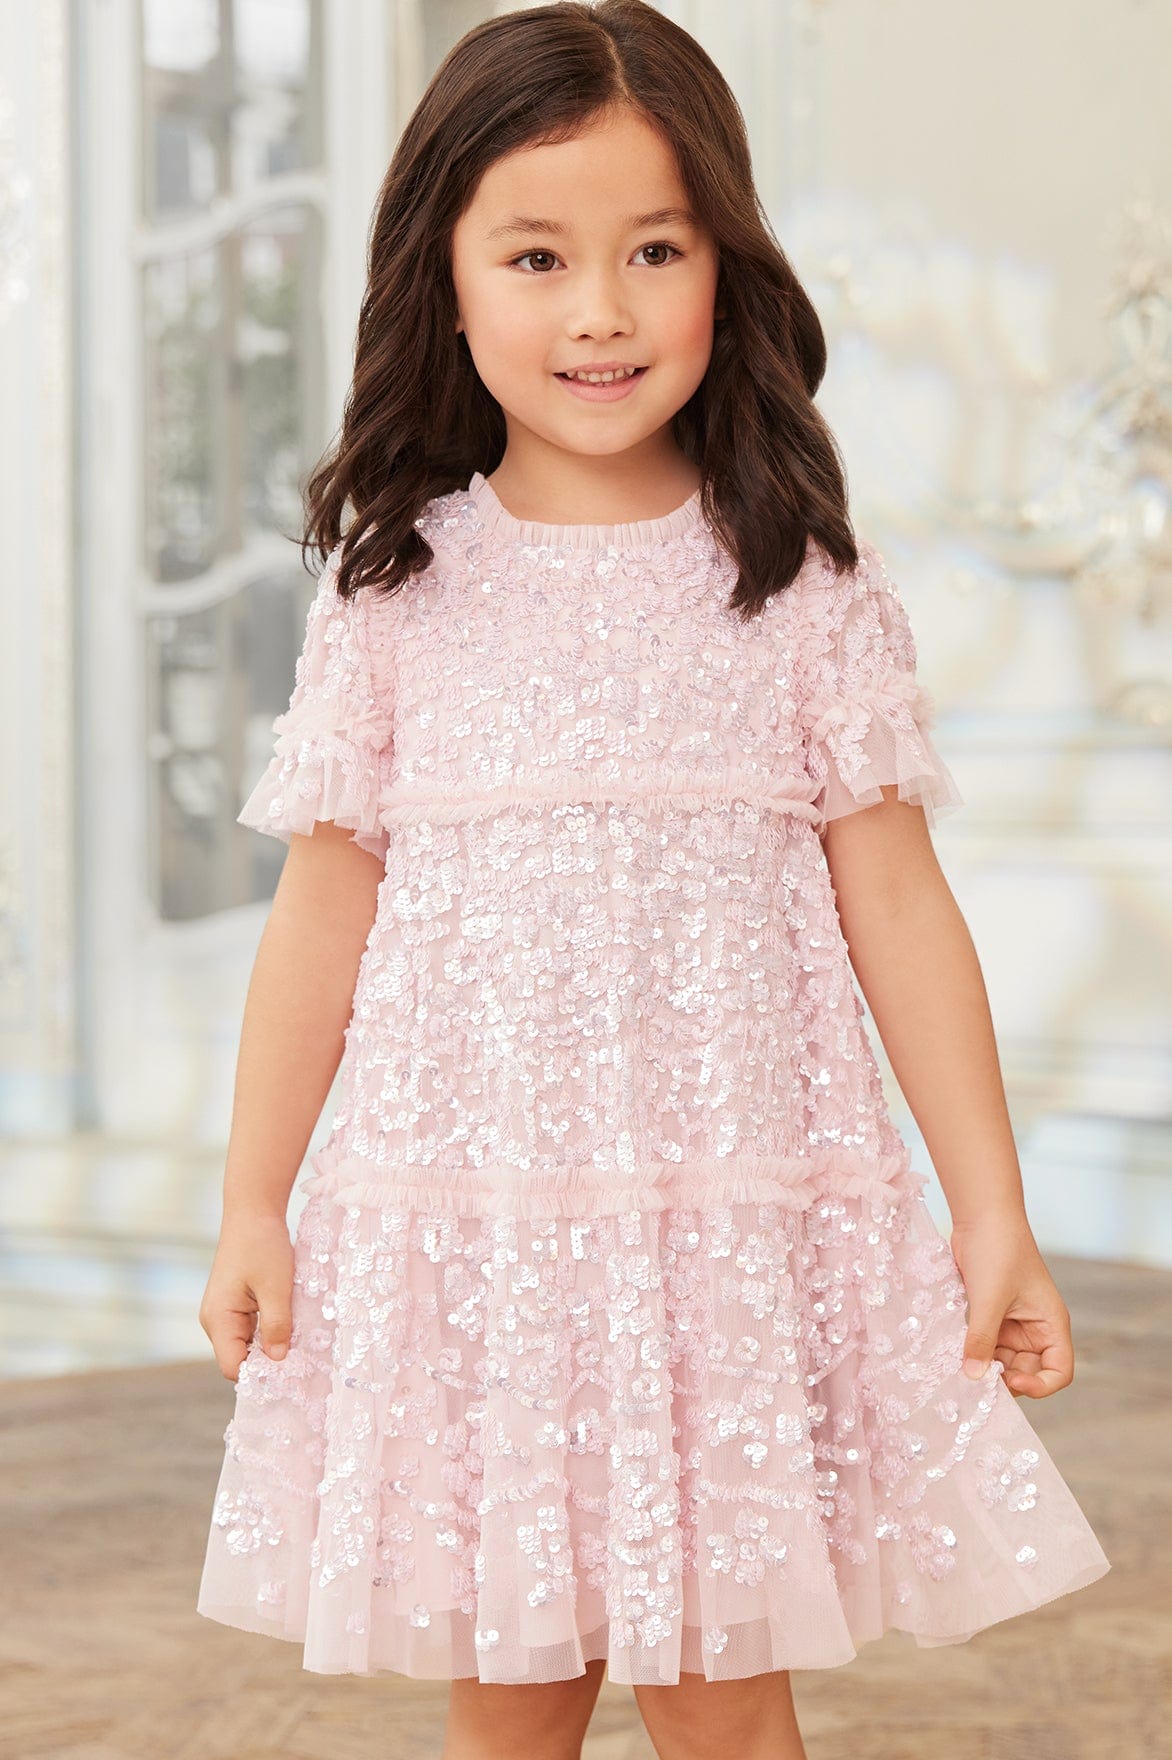 SBYOJLPB Children Dress Girl Puff Sleeve Princess Dress Long Sequin Dress  Canonicals Reduced Price Colorful 11-12 Years - Walmart.com